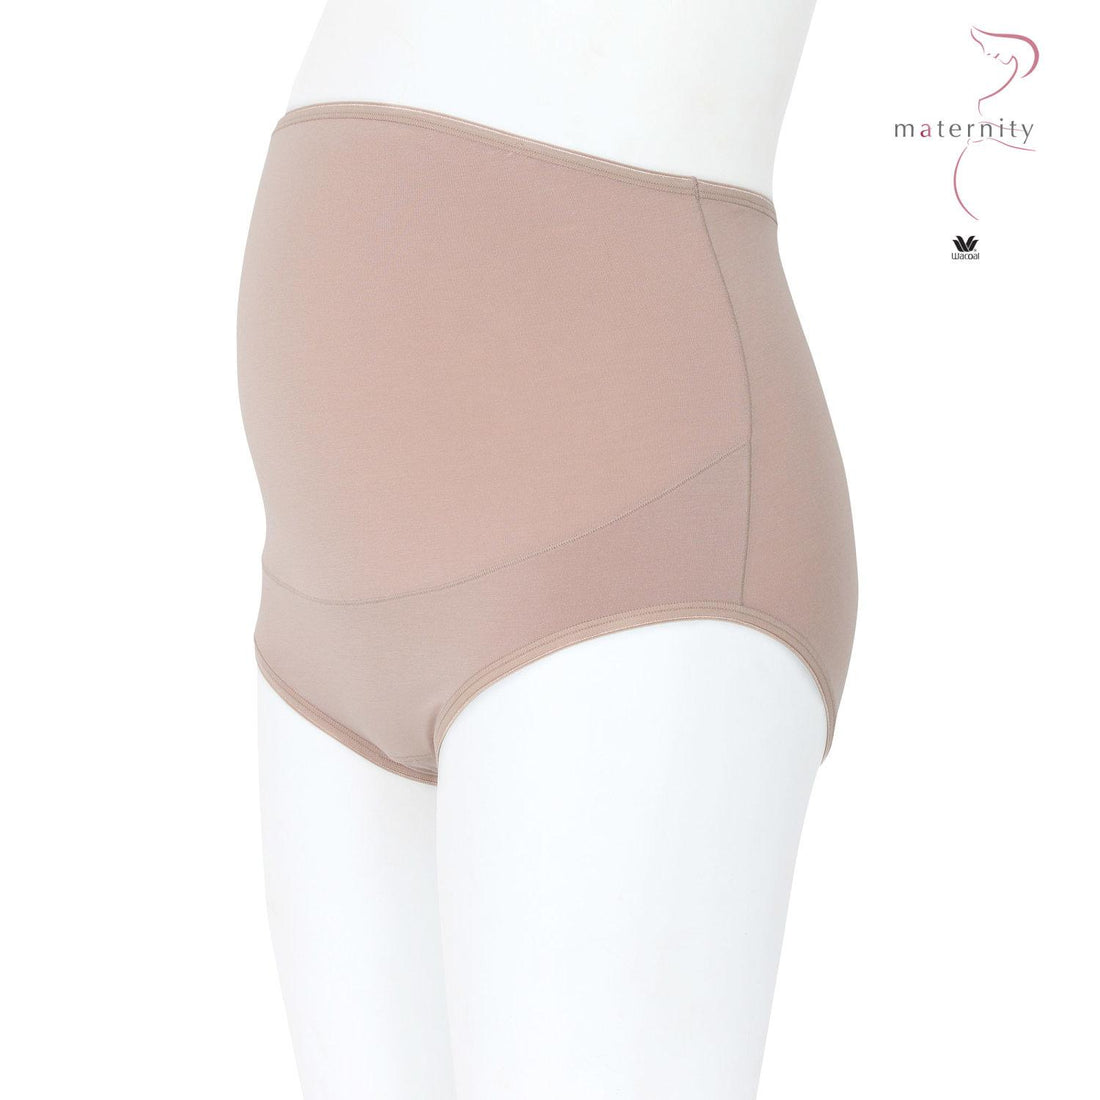 Wacoal Maternity Panty กางเกงในรูปแบบเต็มตัวสำหรับแม่ตั้งครรภ์  รุ่น WM6545 สีโอวัลติน (OT)